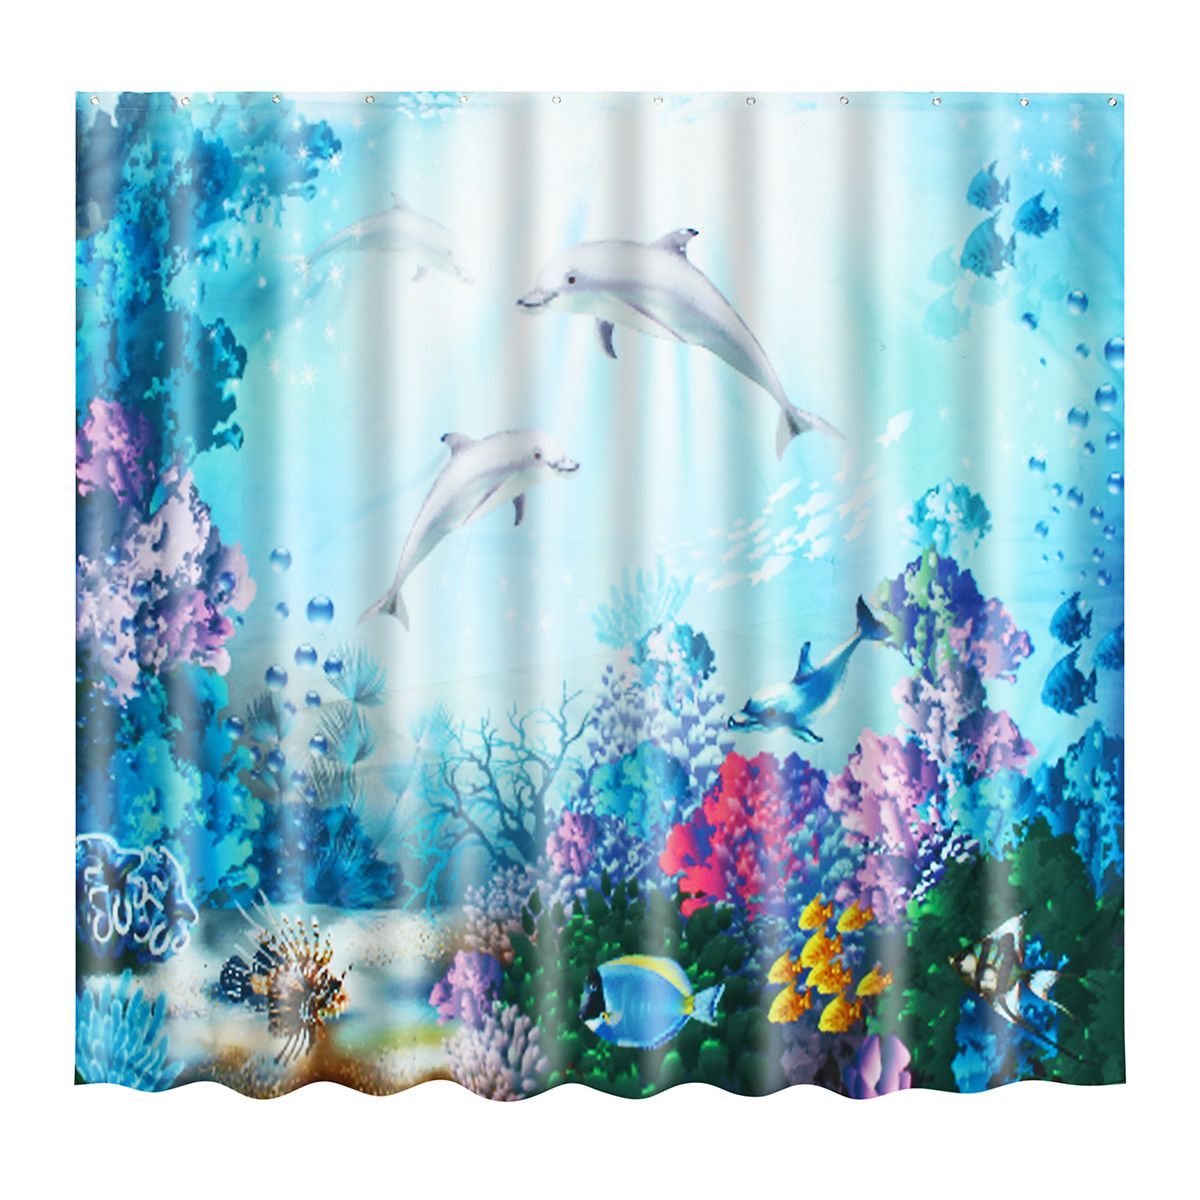 Waterproof-Shower-Curtain-Underwater-World-Dolphin-Bathroom-Mat-Hook-Home-1463568